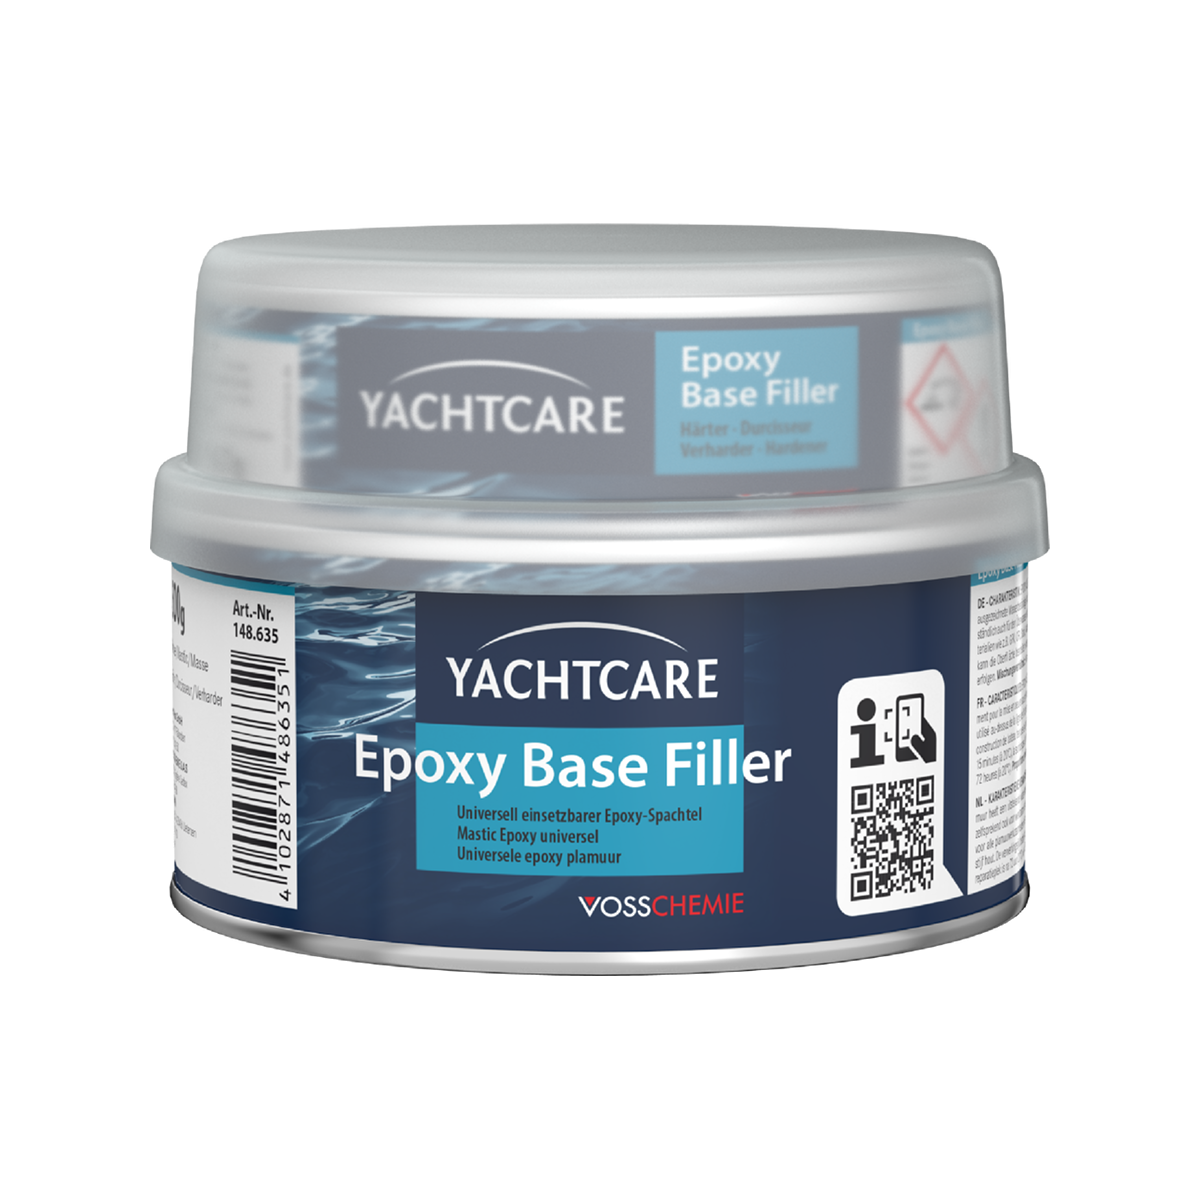 Yachtcare Exposy Base Filter plamuur lichtgrijs - 500g